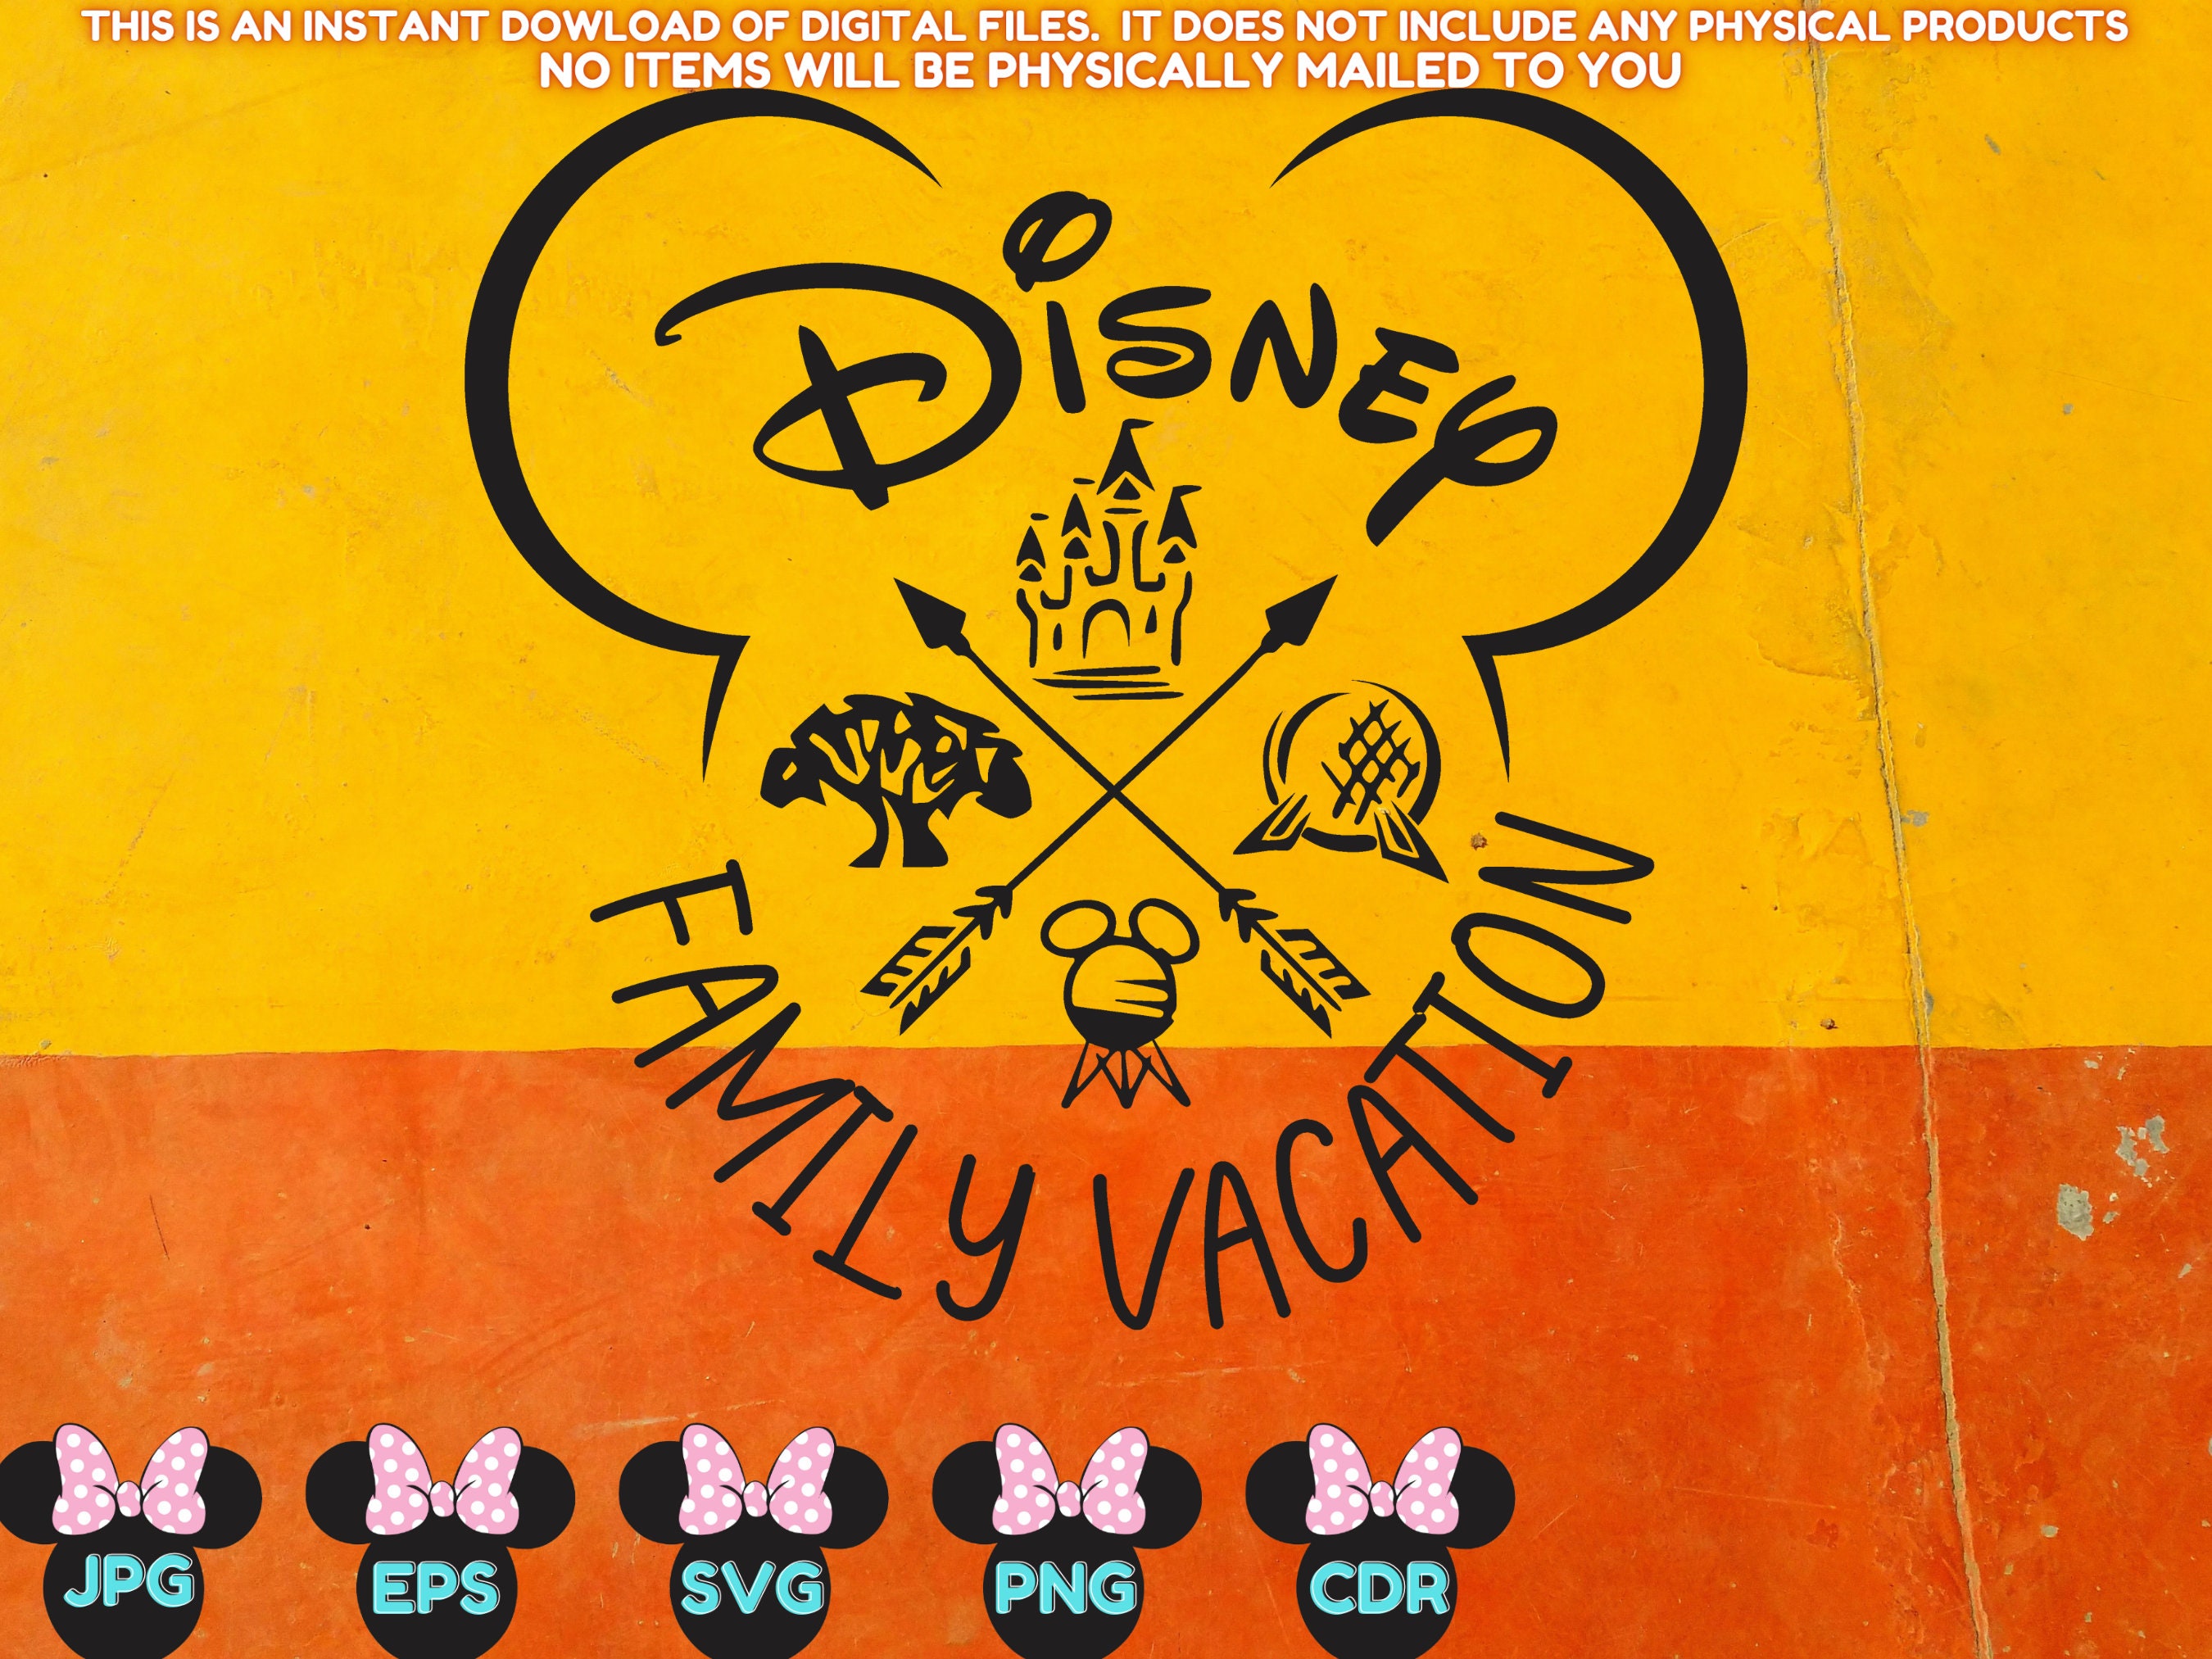 Disney SVG Disney Family Vacation 2021 Solo archivo digital | Etsy